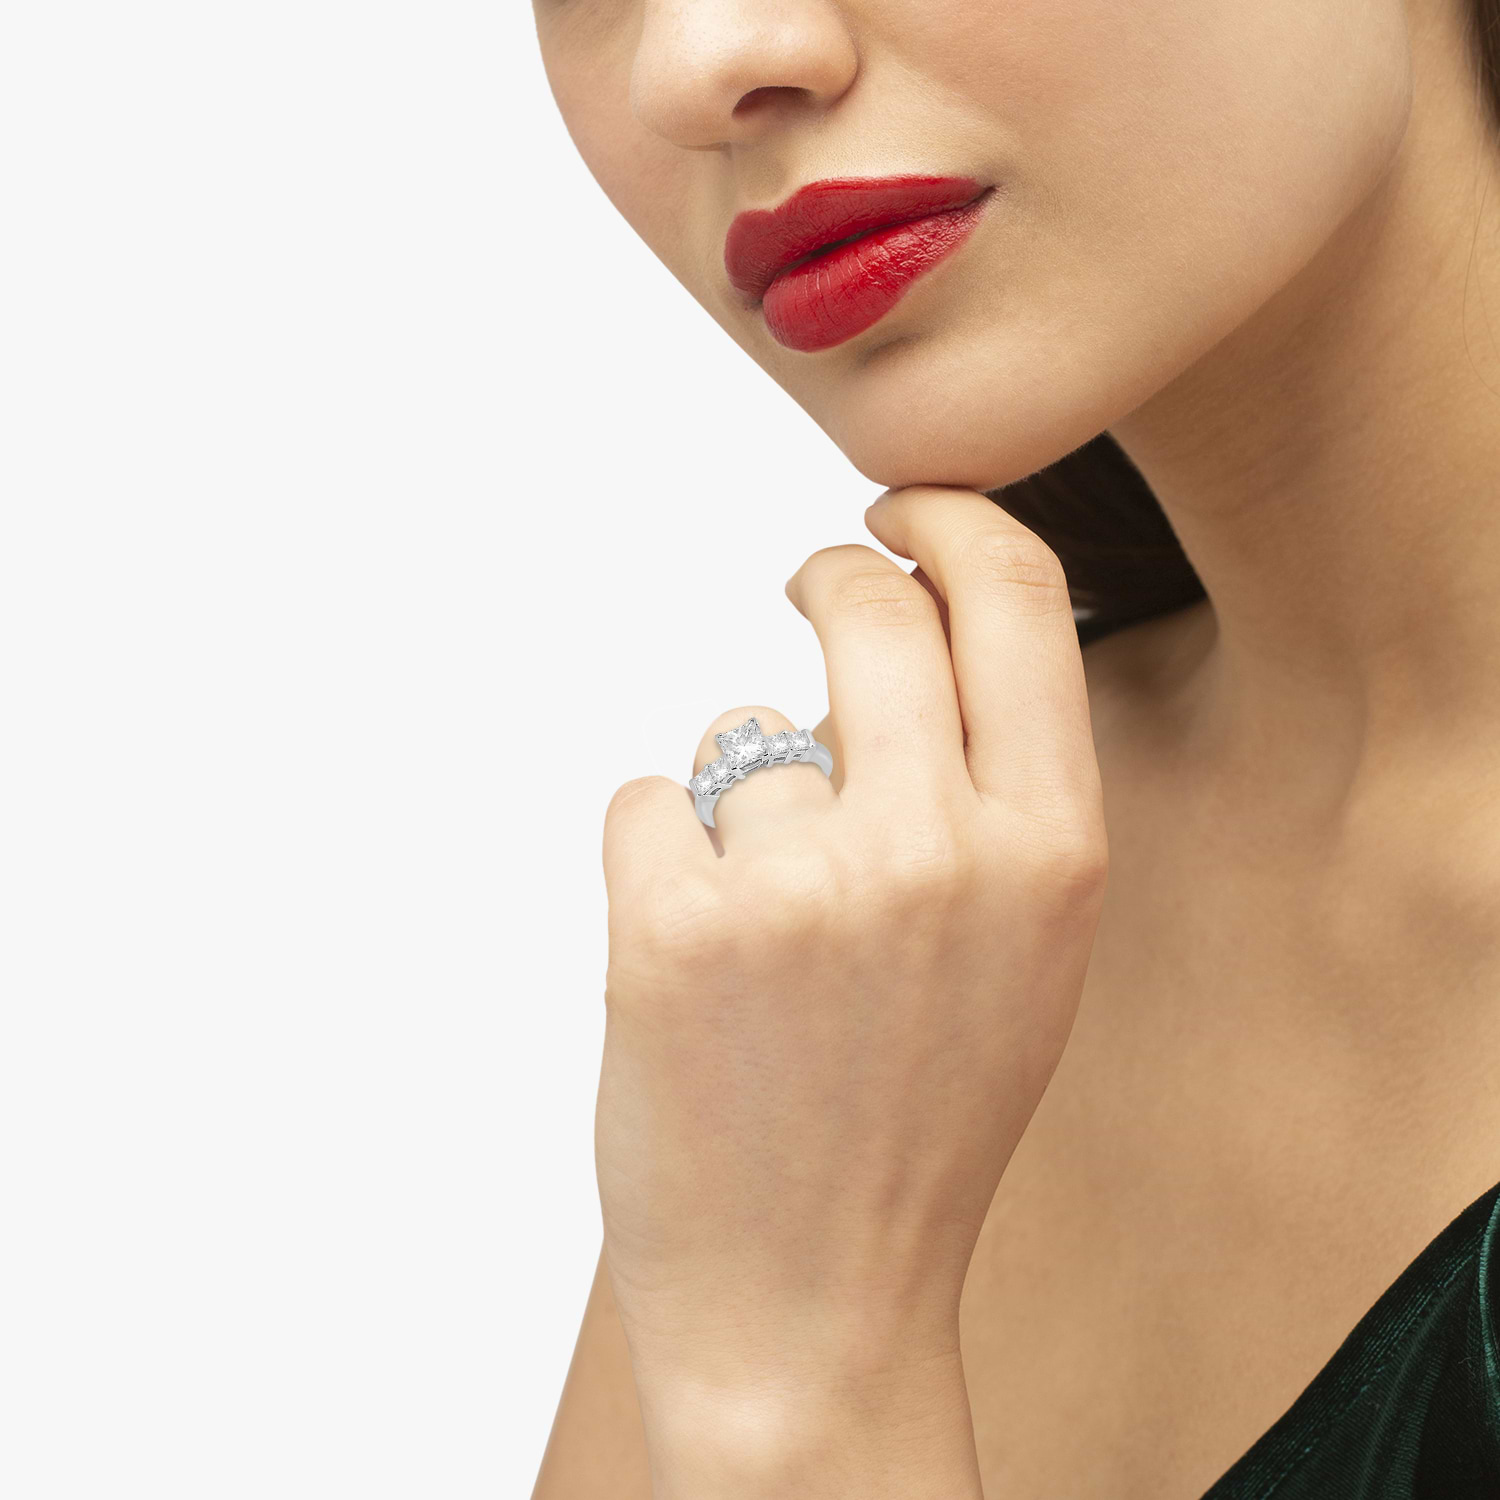 5 Stone Princess Cut Diamond Engagement Ring 14K White Gold (0.40ct)